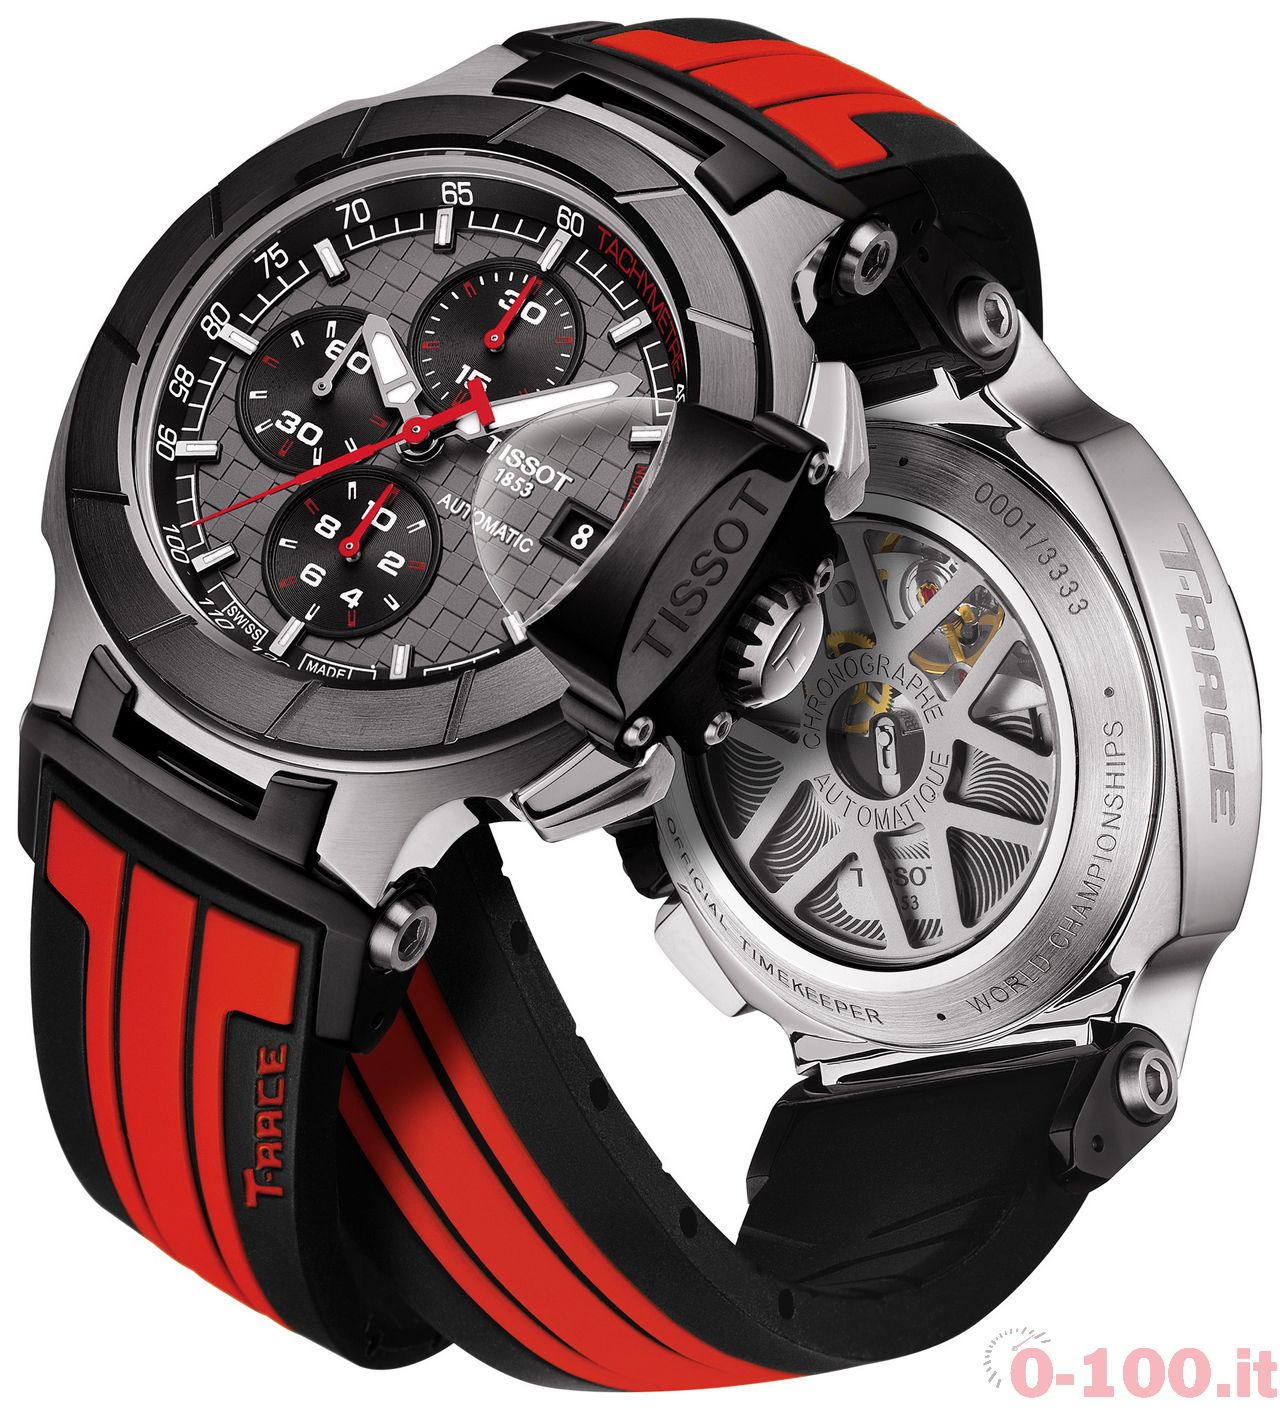 baselworld-2014-tissot-t-race-motogptm-automatic-chronograph-limited-edition-2014-prezzo-price_0-1001